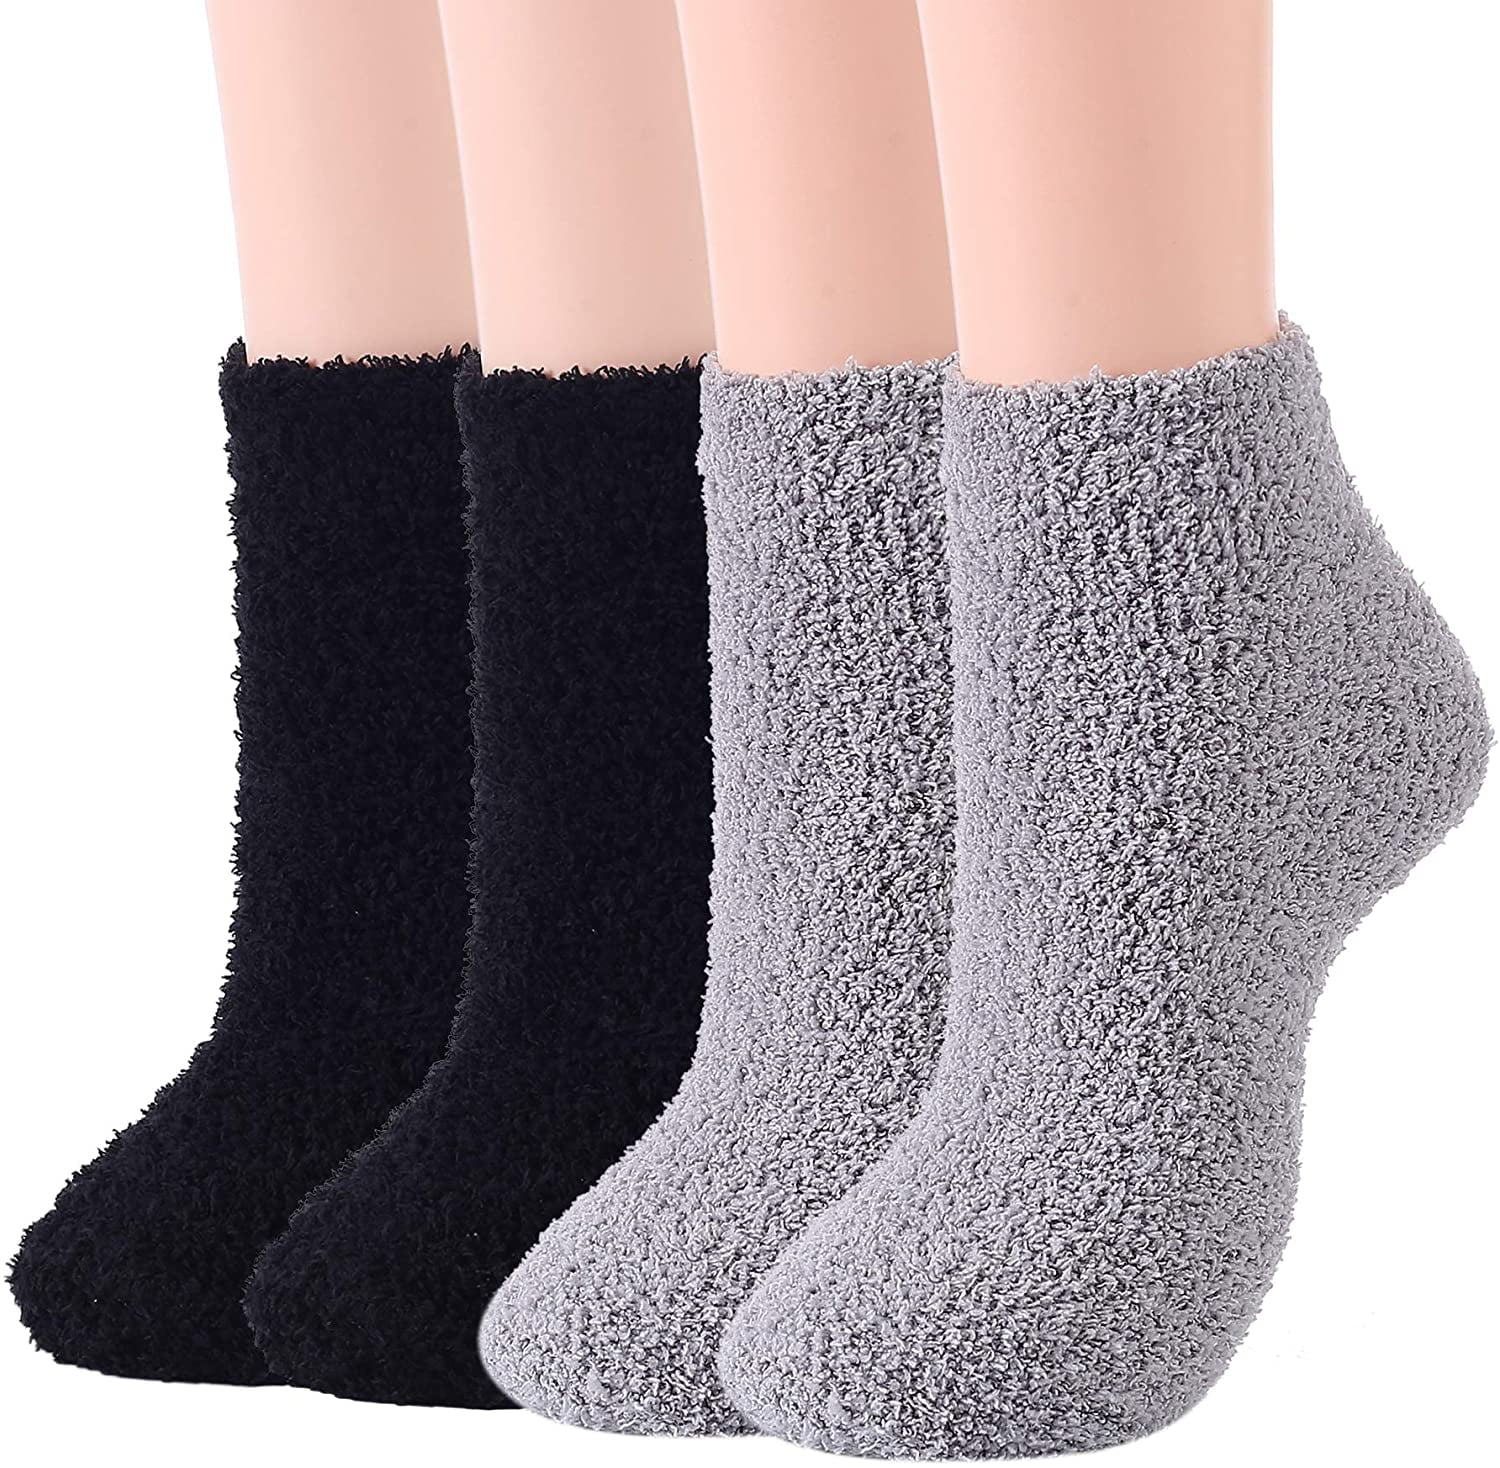 3 Pair Women Plush Girl Winter Socks Long Knee High Cozy Fuzzy 9-11 Slipper Warm